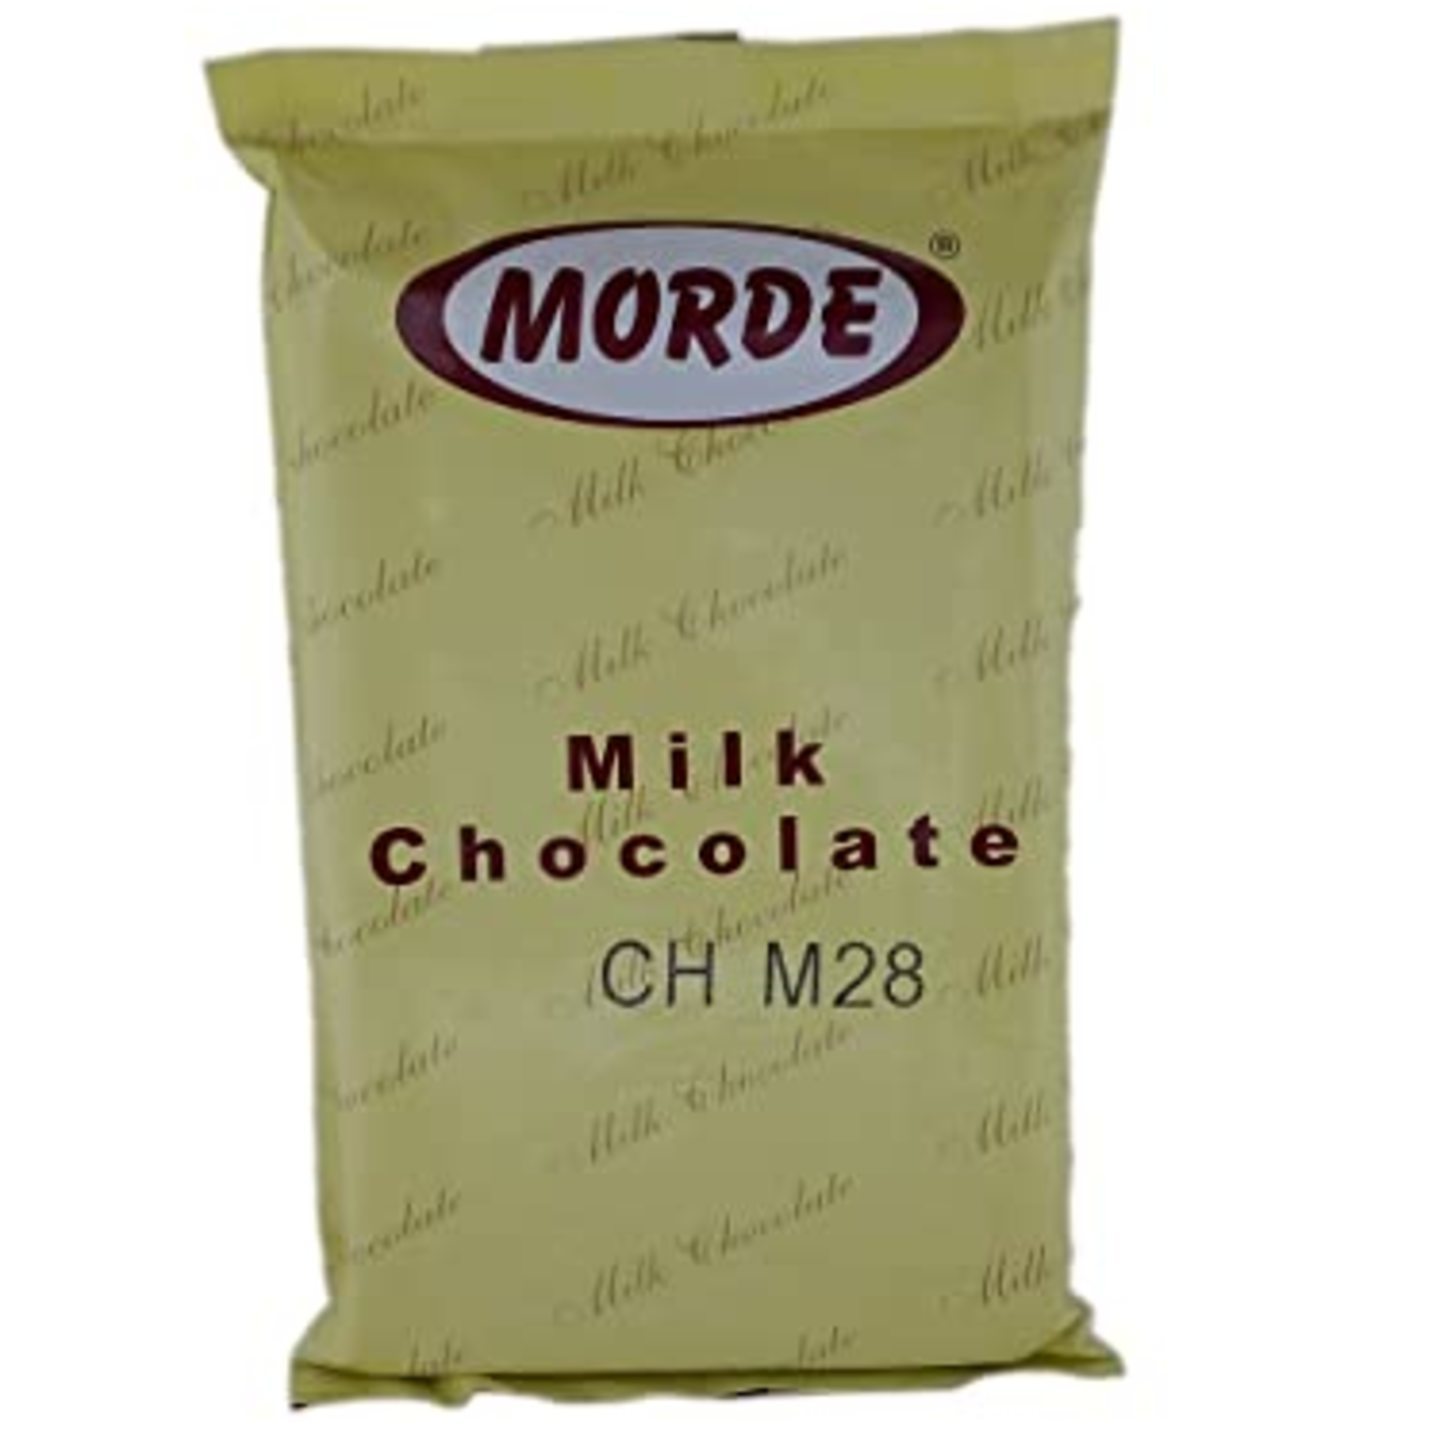 Morde M 28 Milk Chocolate Bar